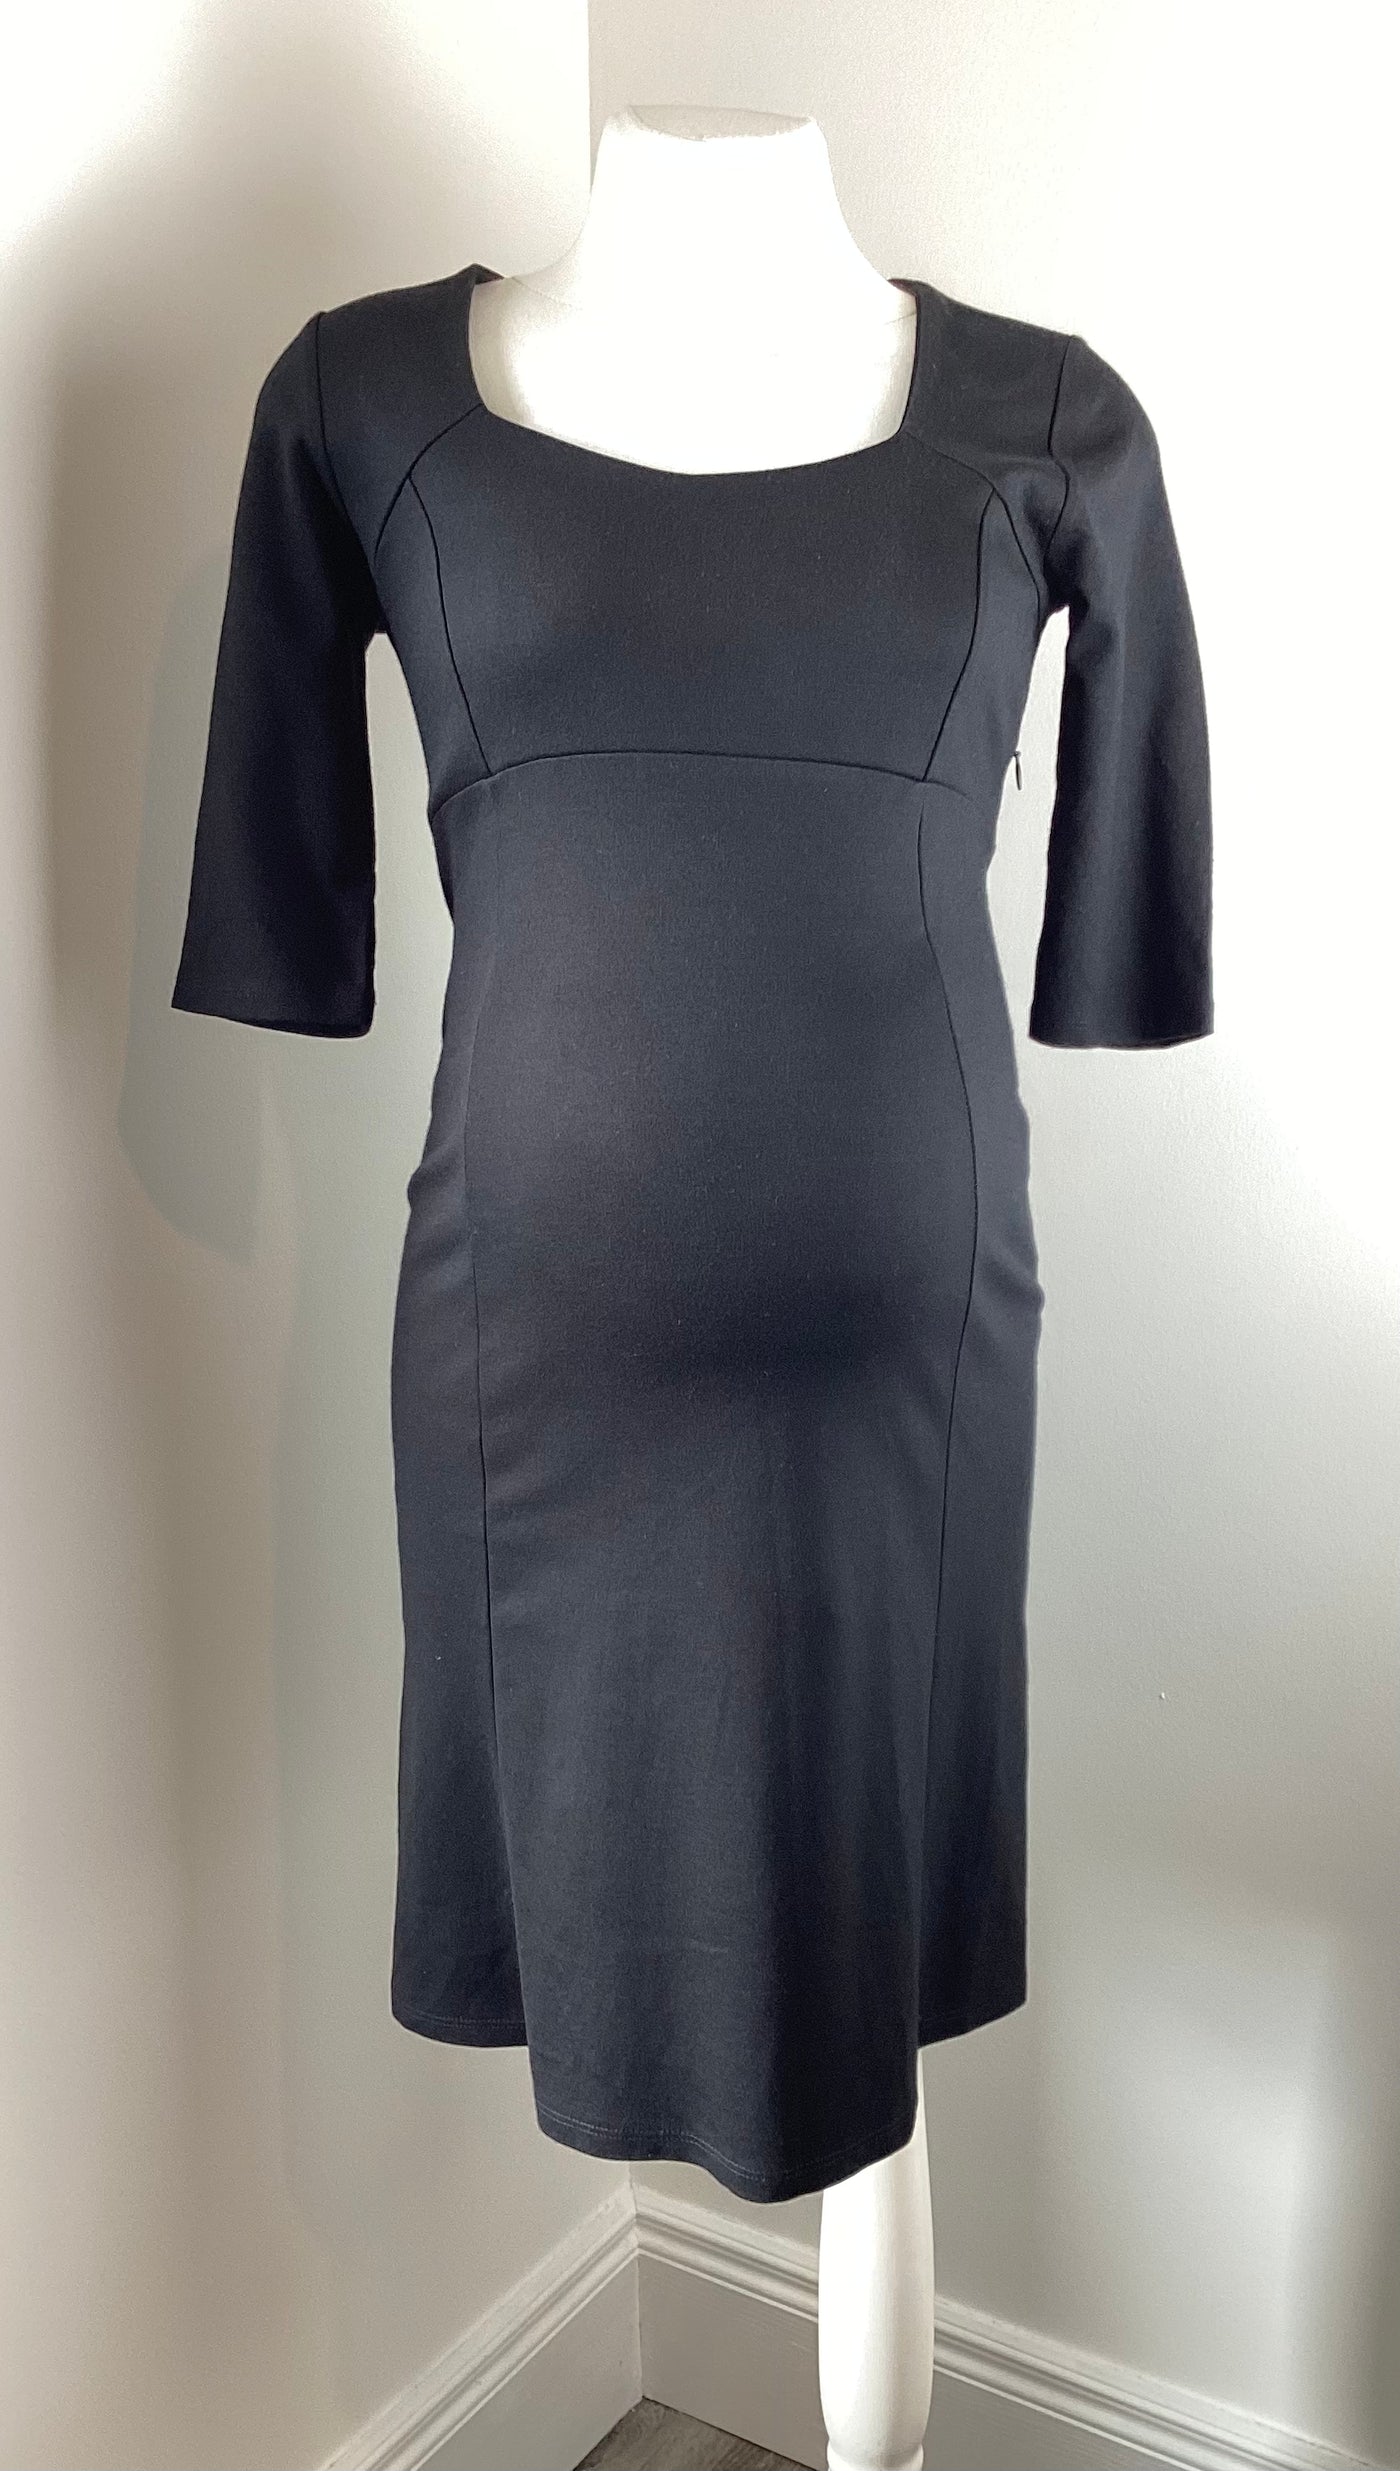 Jojo Maman Bebe Black tailored dress (BNWT) - Size 6 (more like 6/8)